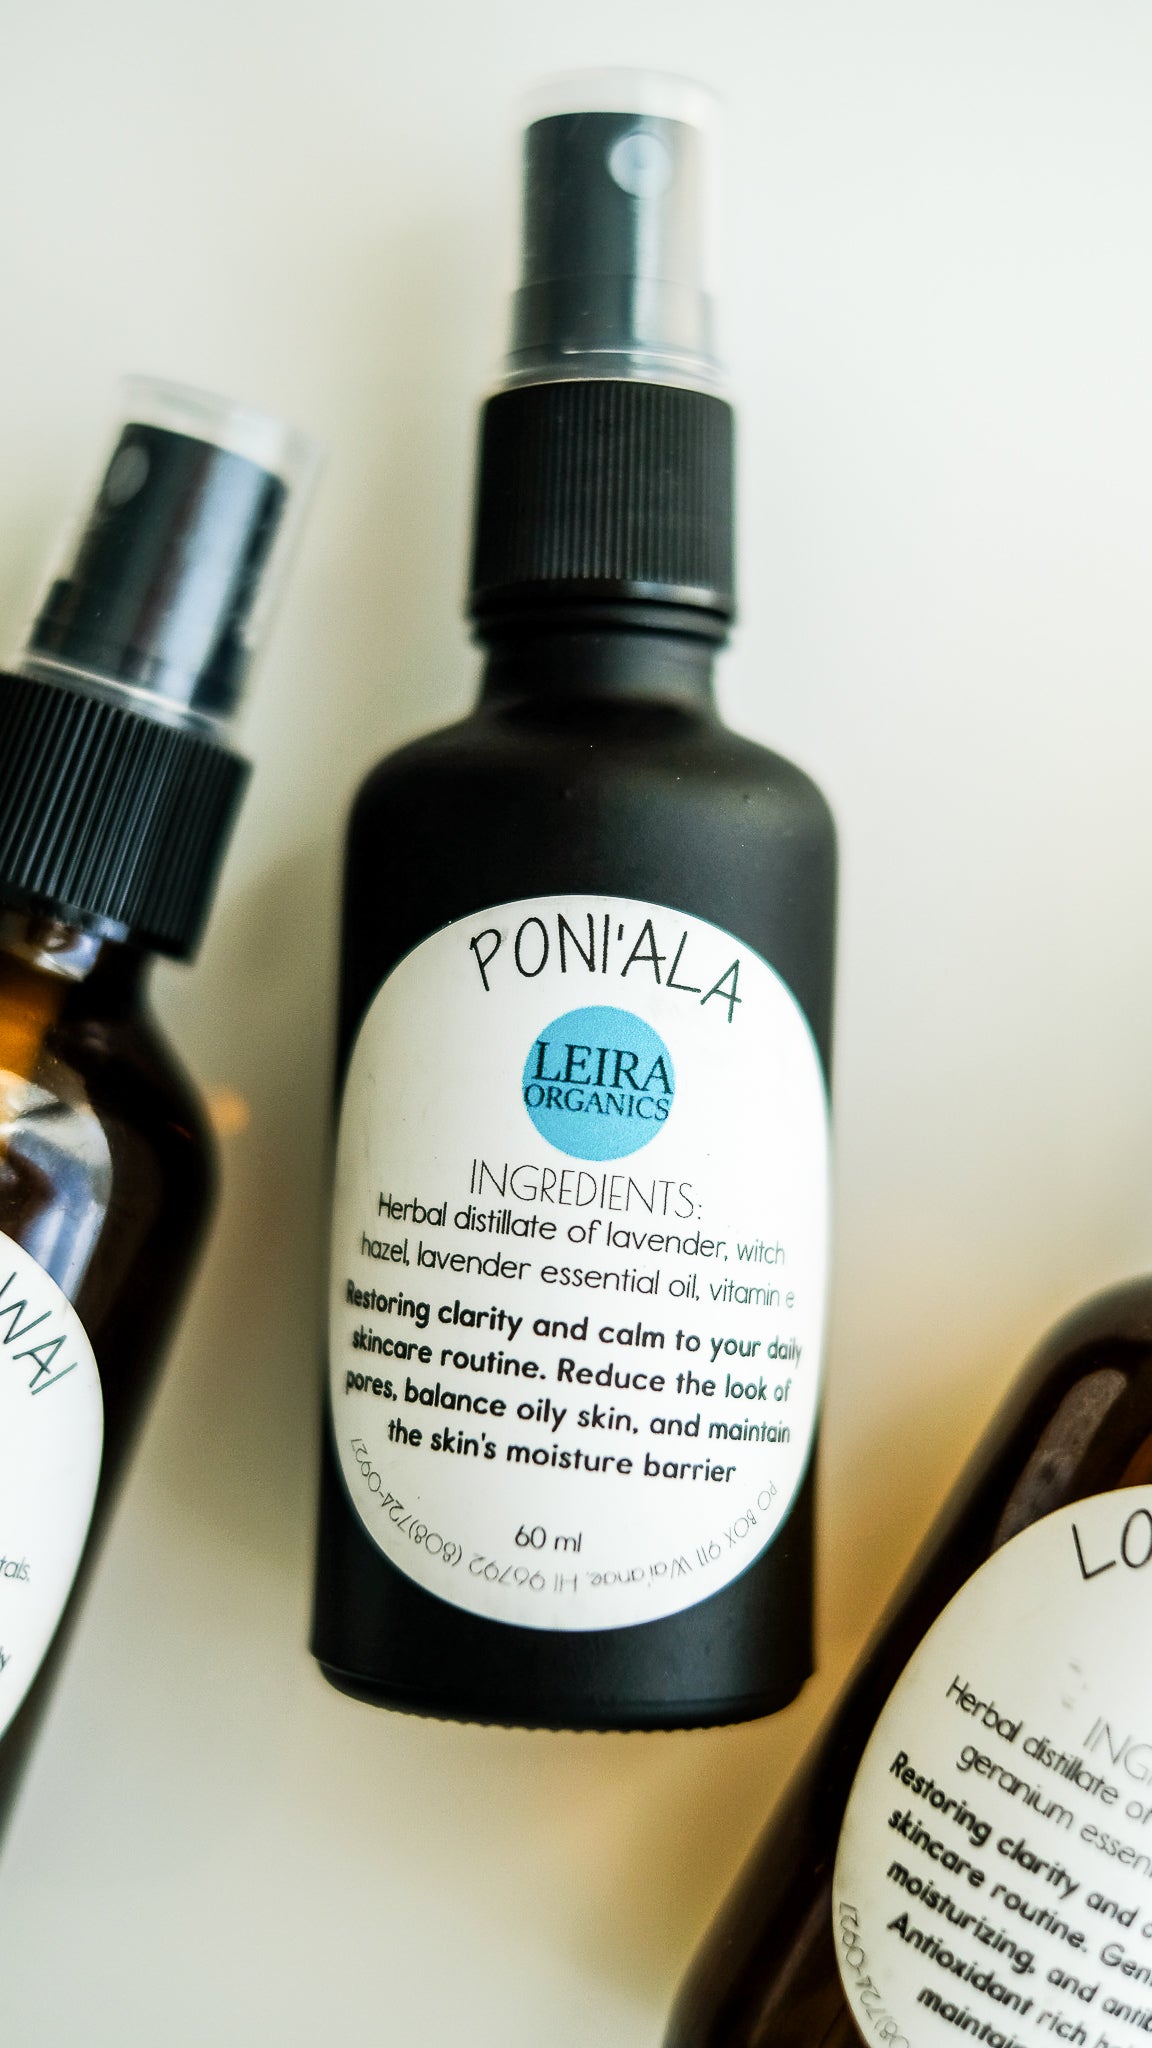 Poniʻala Toner - Leira Organics